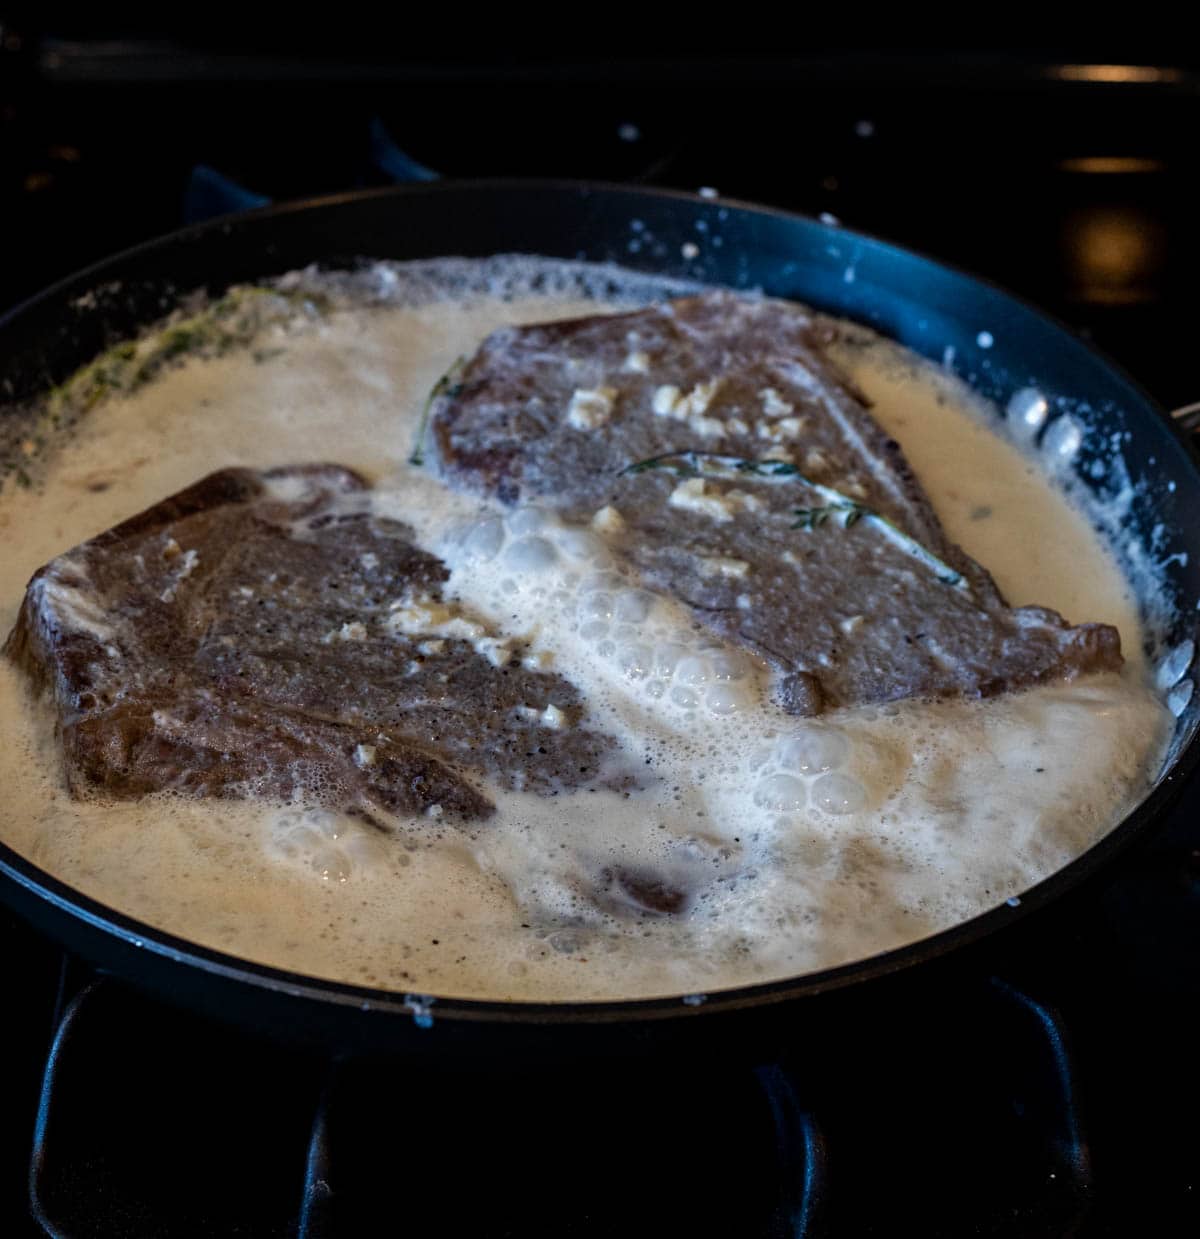 Milk steak being cooked in a skillet.